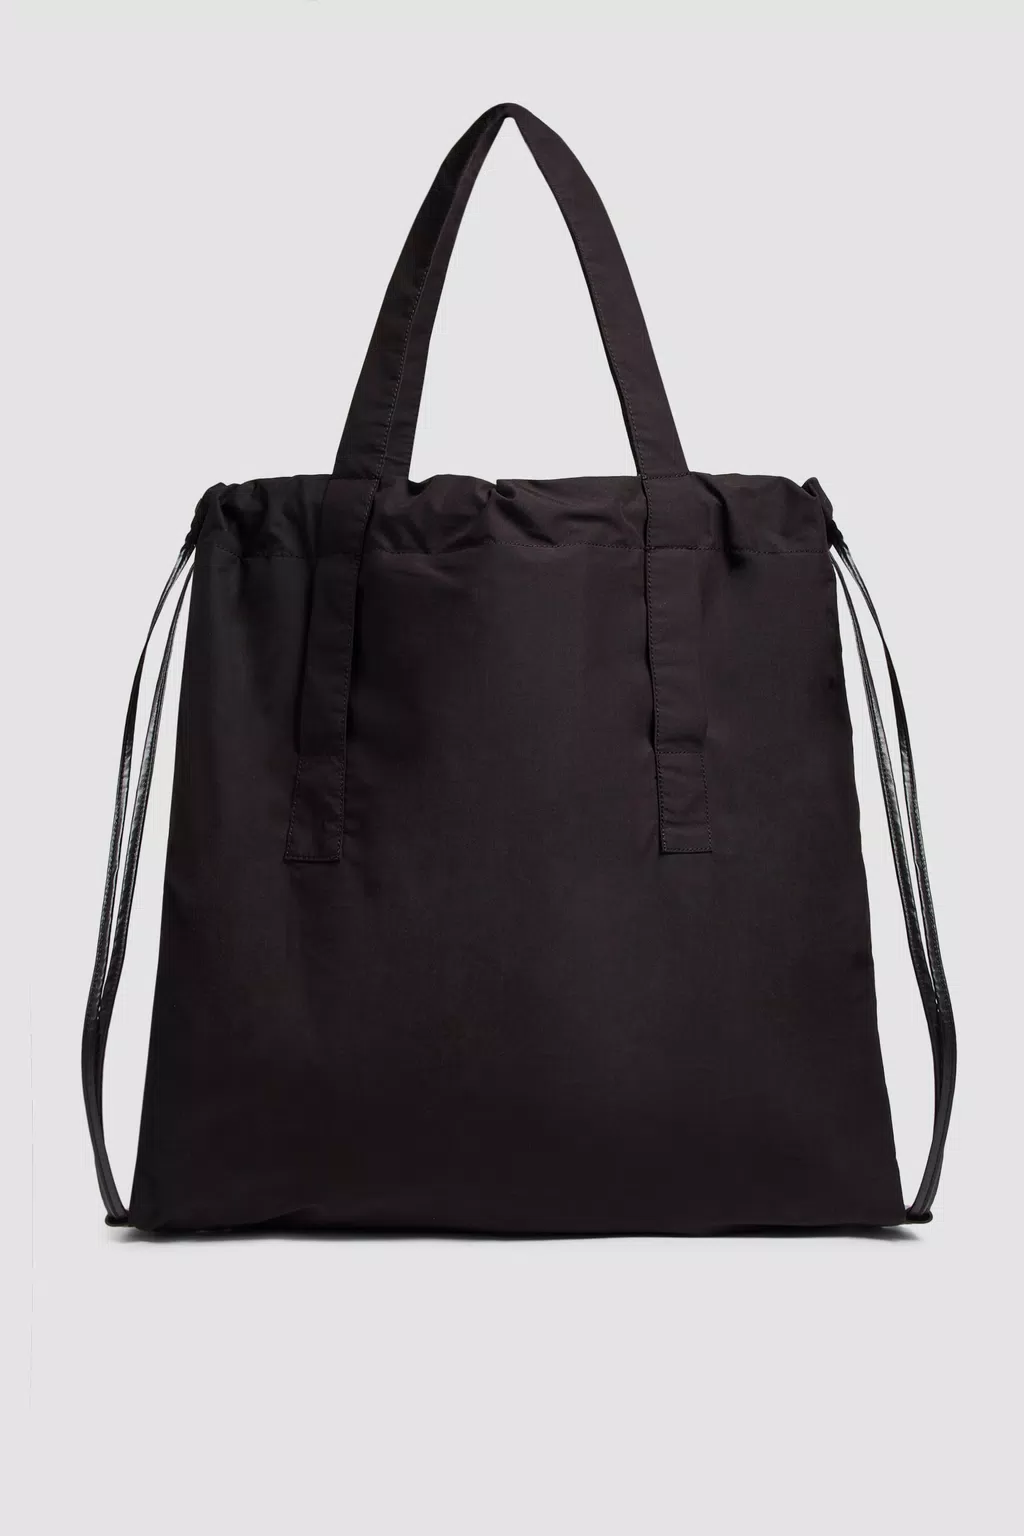 Black AQ Drawstring Tote Bag - Bags & Small Accessories for Men ...